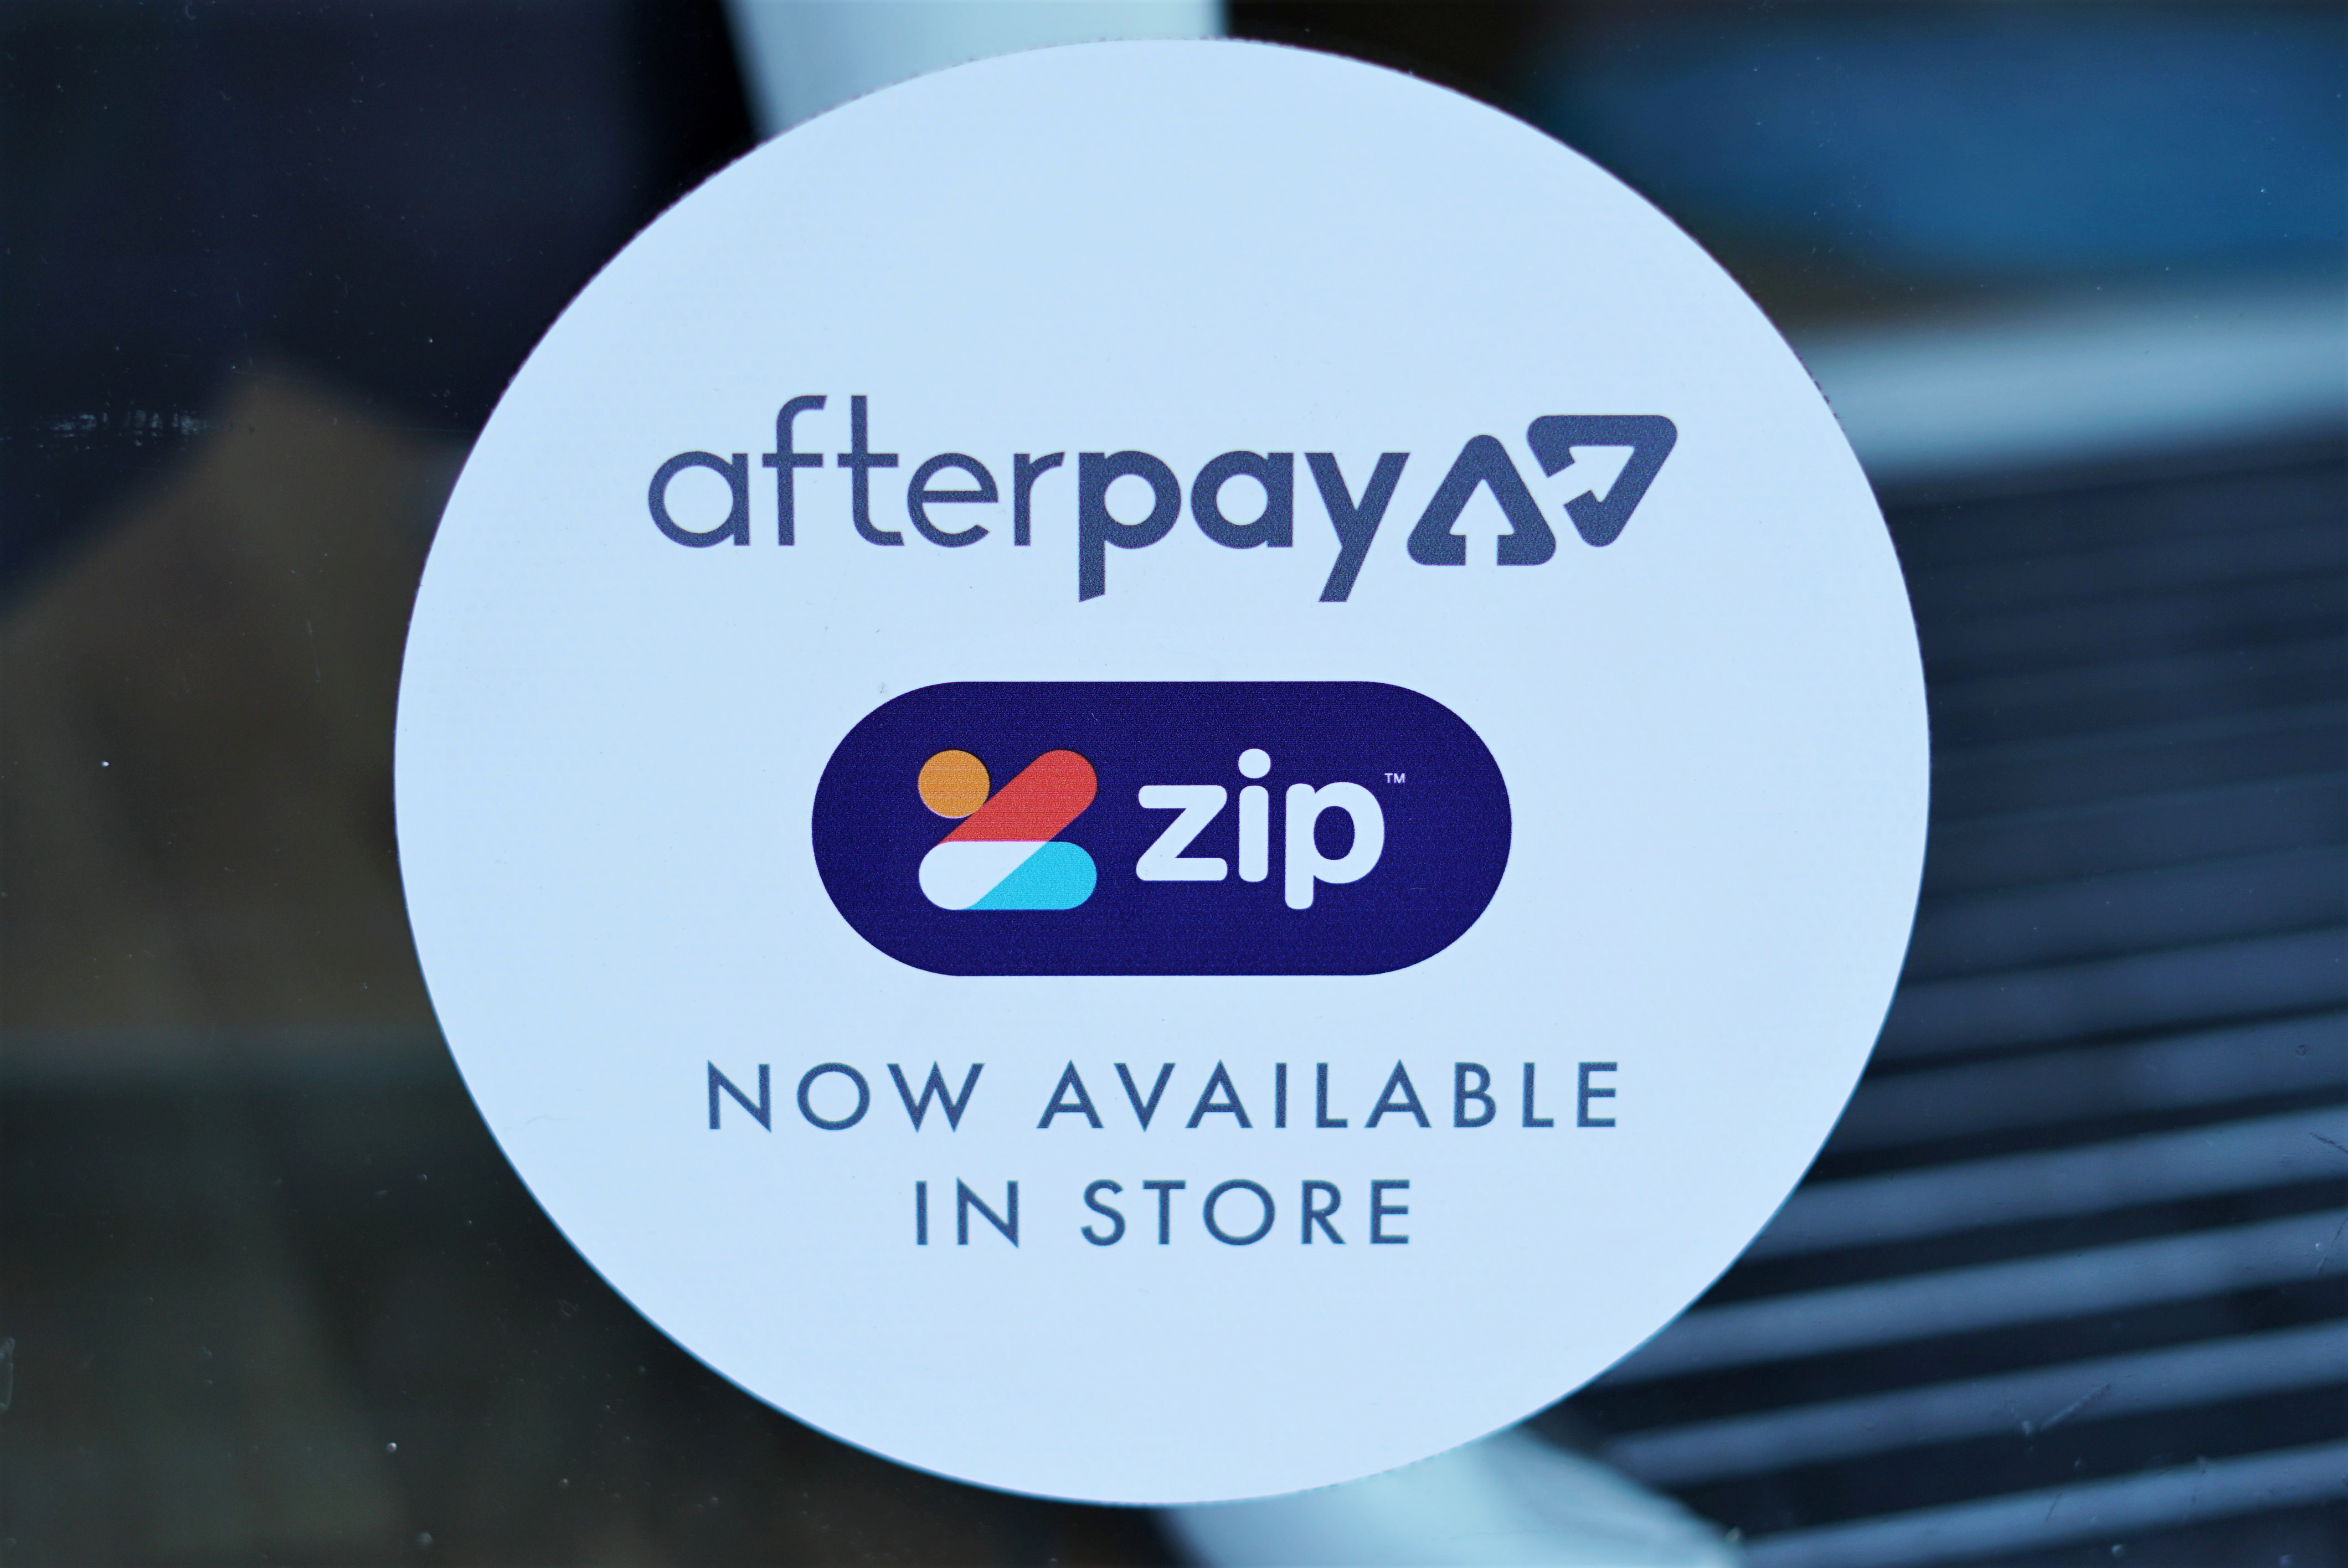 Buy now, pay later brand Zip breaks into U.S. market